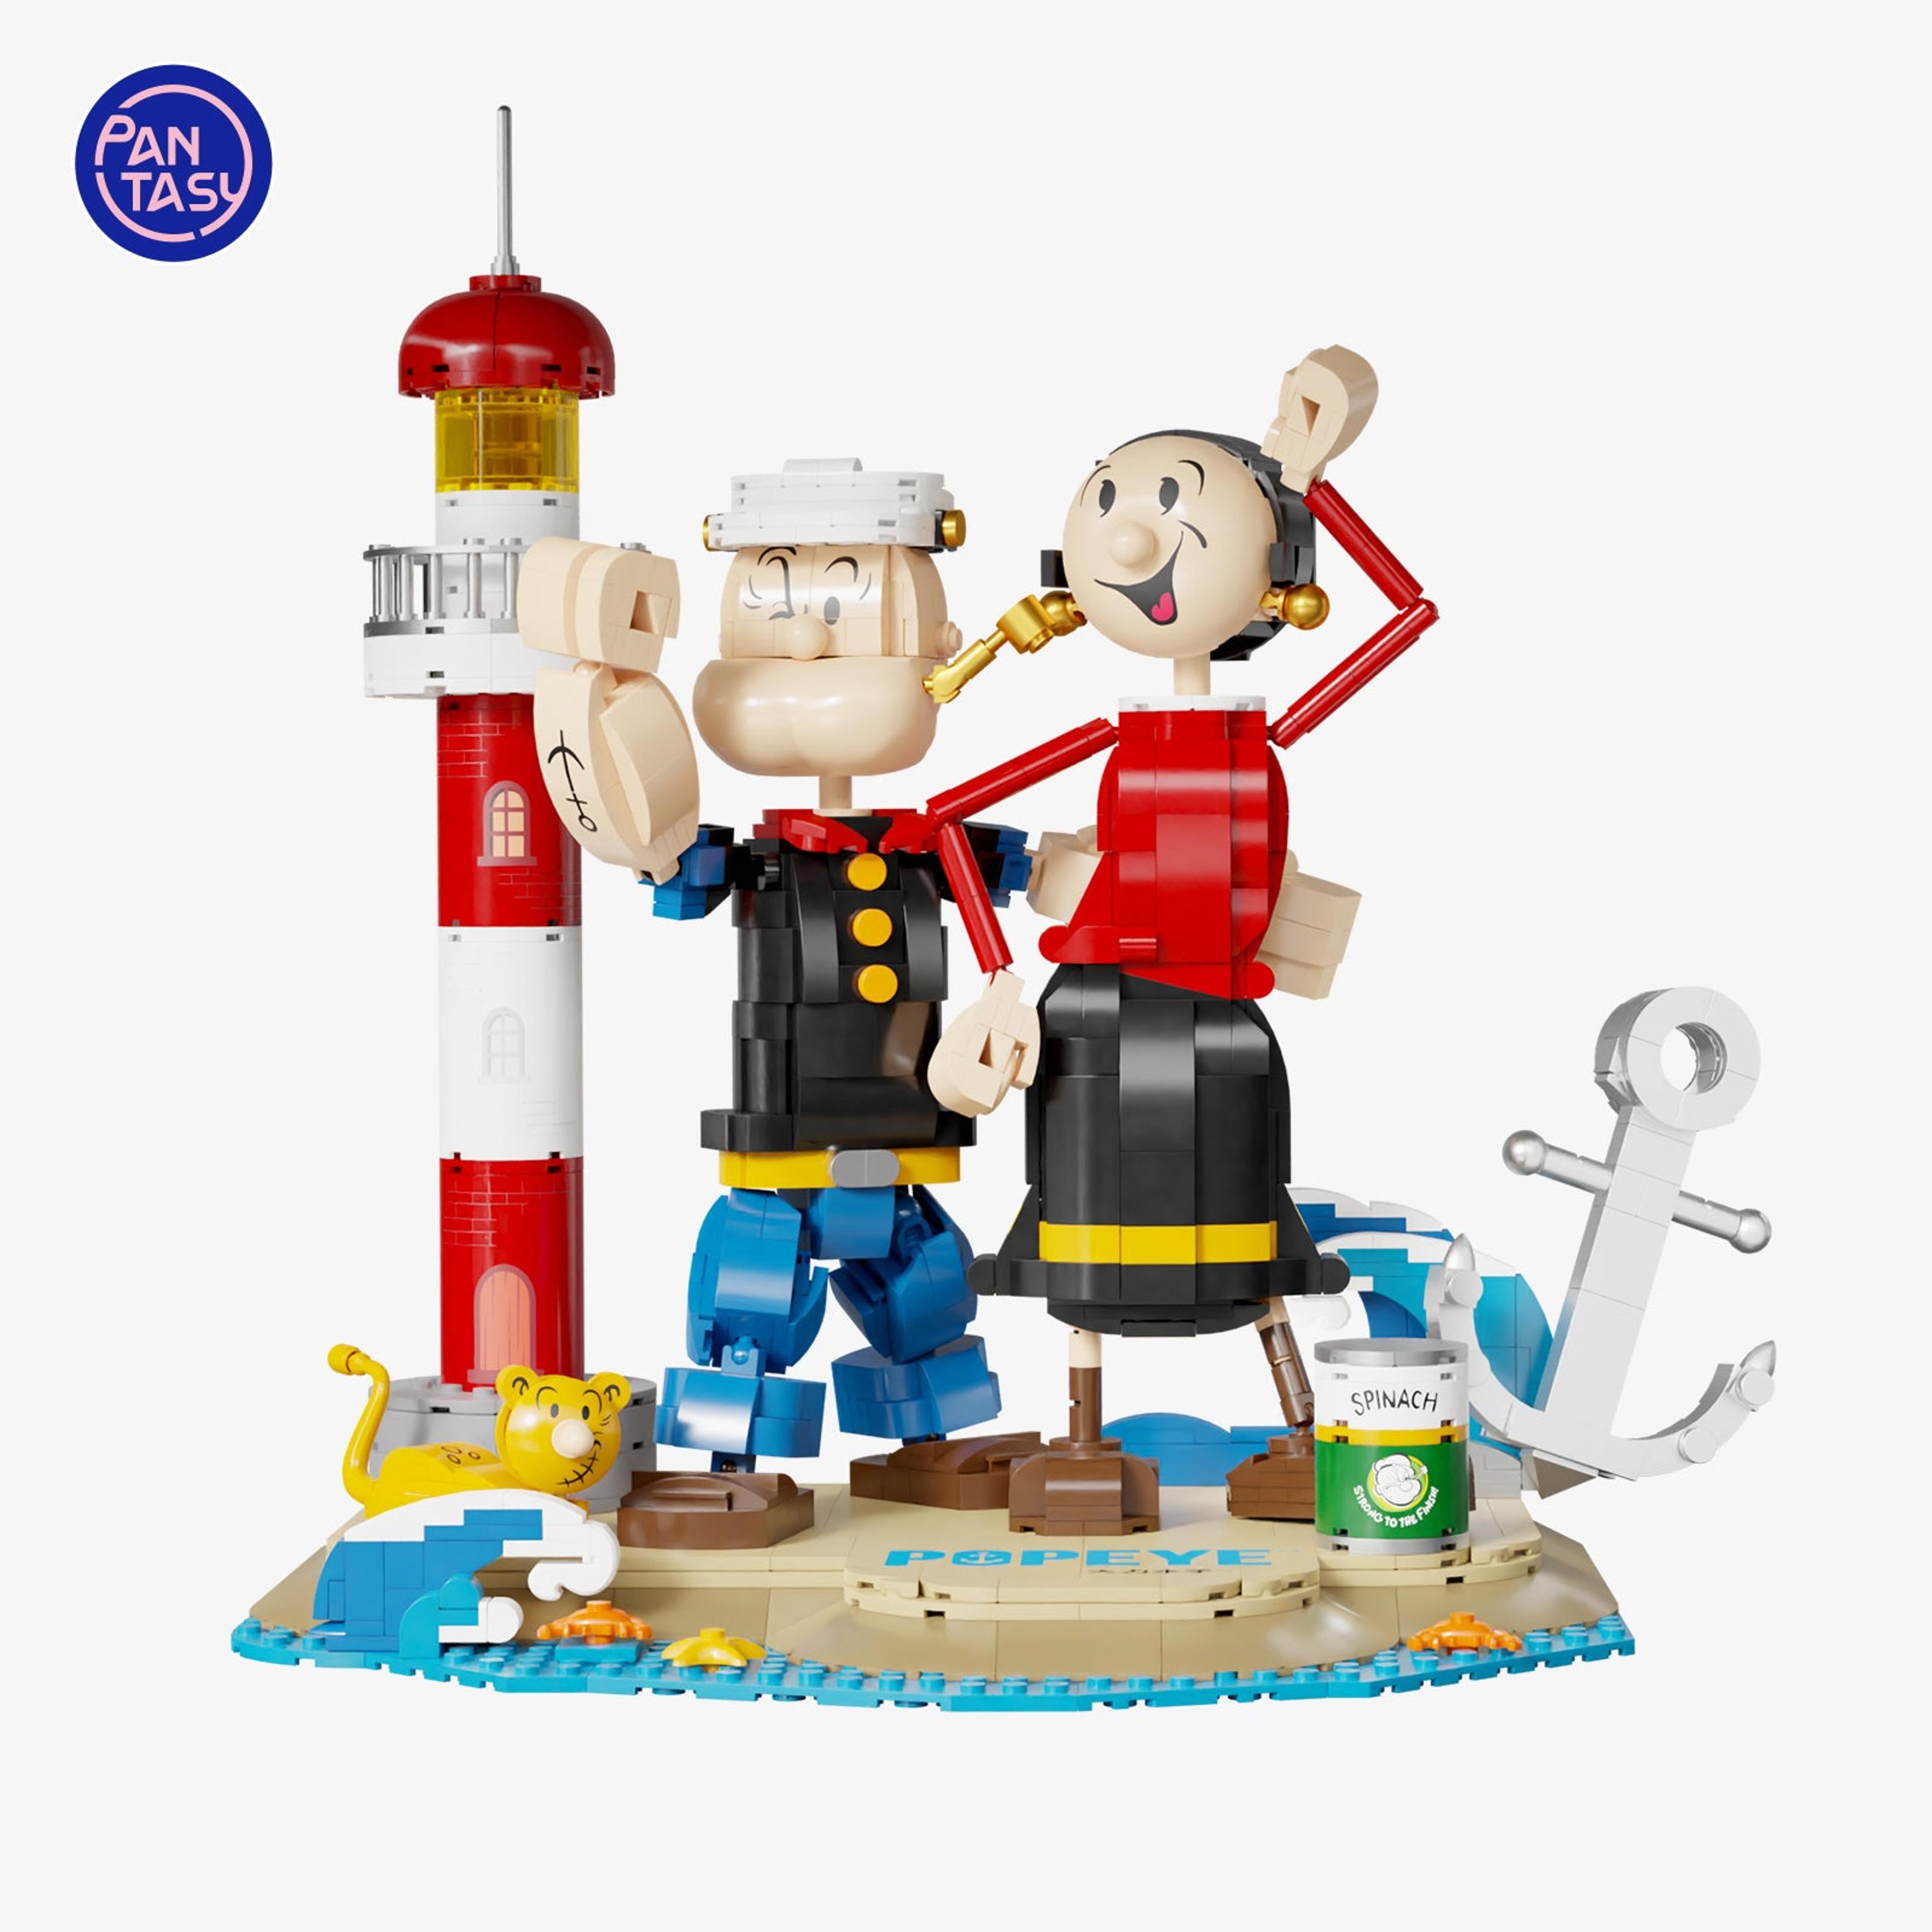 Alternate View 1 of Popeye & Olive Characters Bricks Building Kit